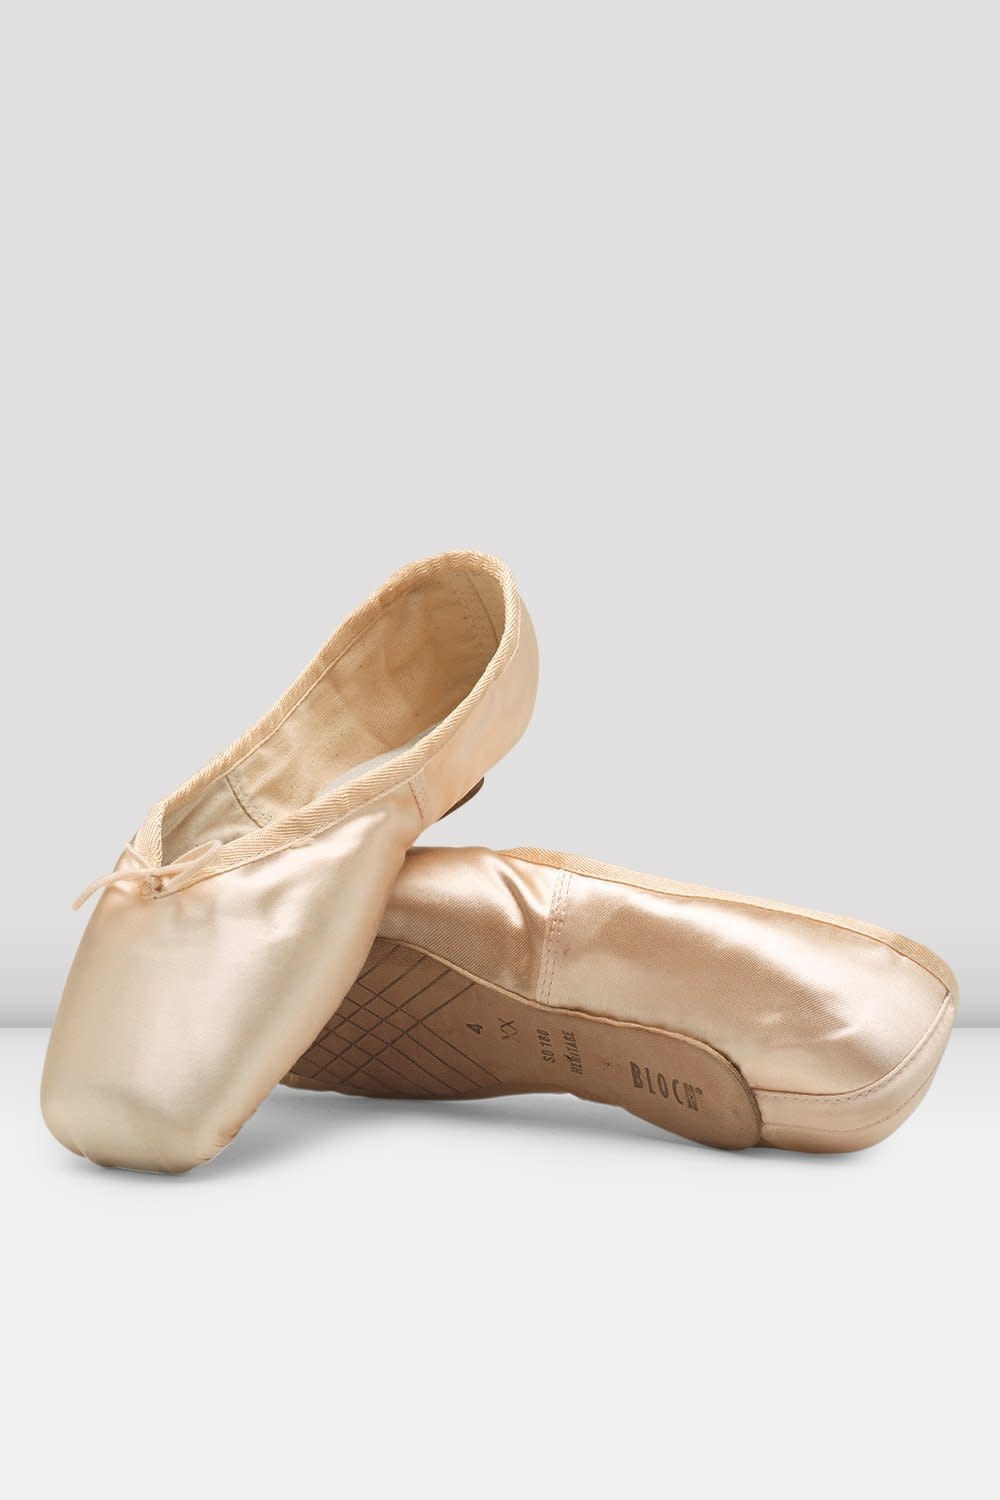 Bloch Pointe Shoes 3/4 shank Synergy S0101L w/Stretch ribbon & Elastic  new/box